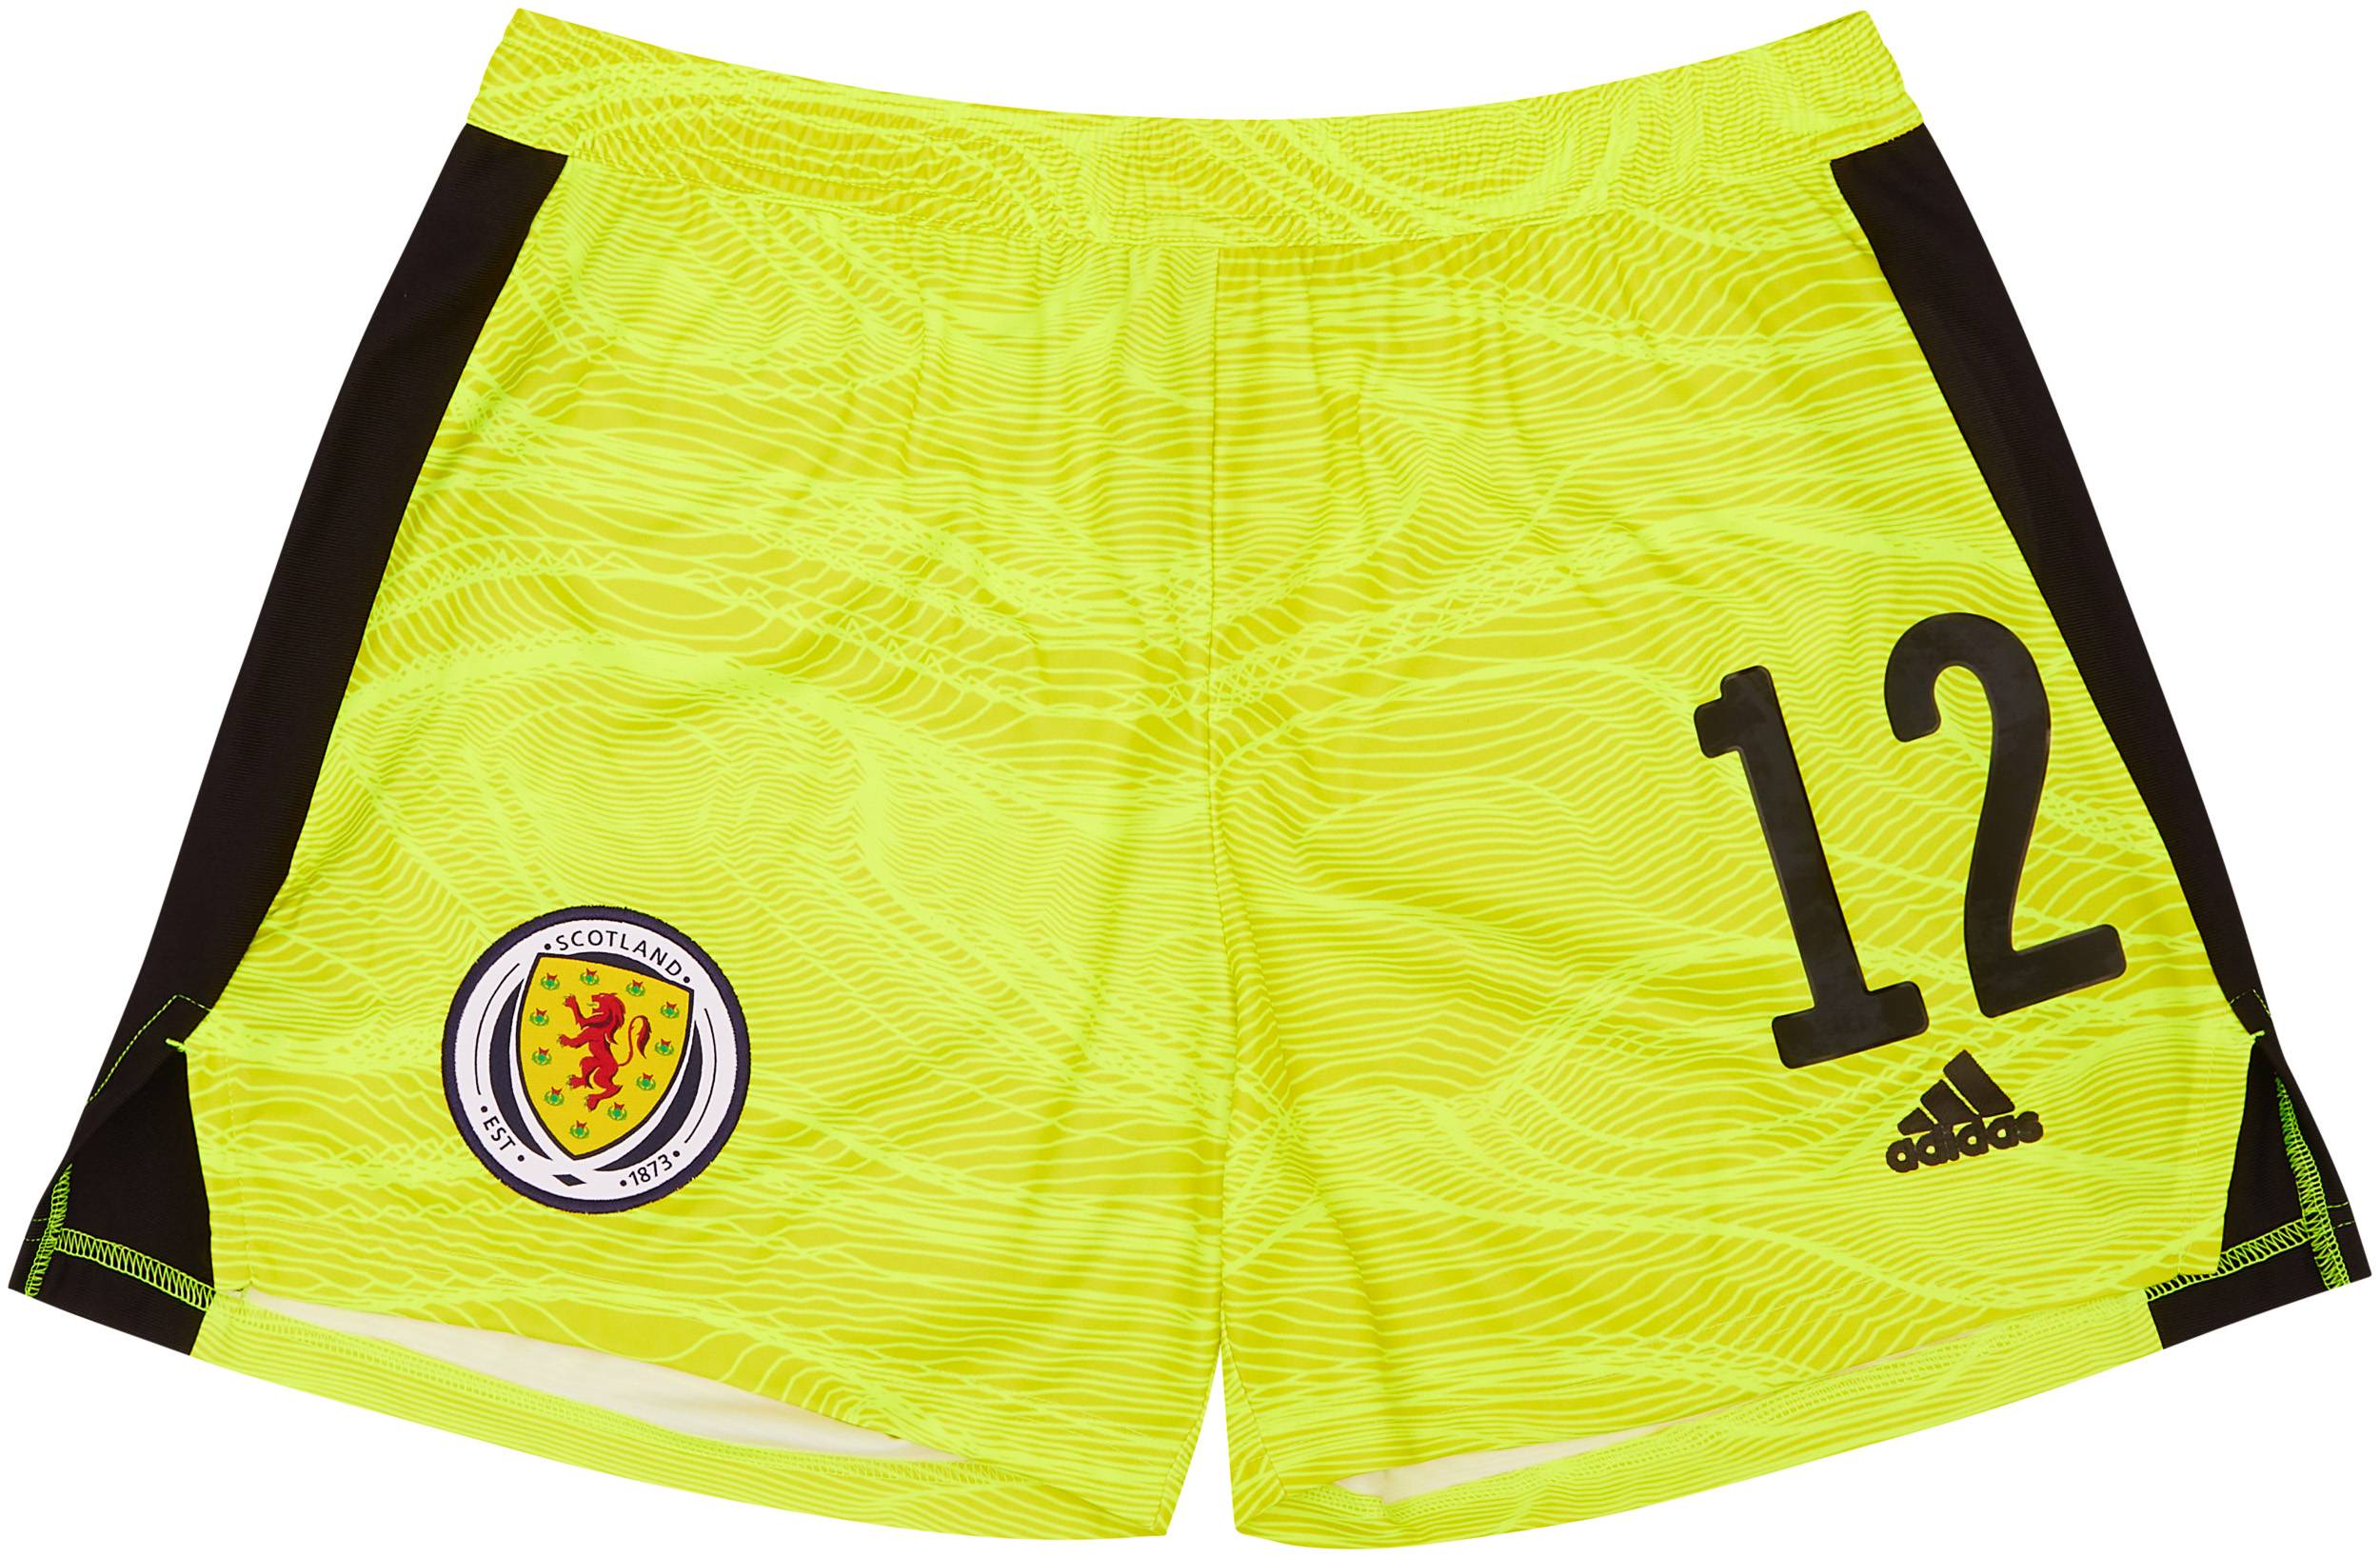 2021-22 Scotland GK Shorts #12 (Fife) Womens (L)